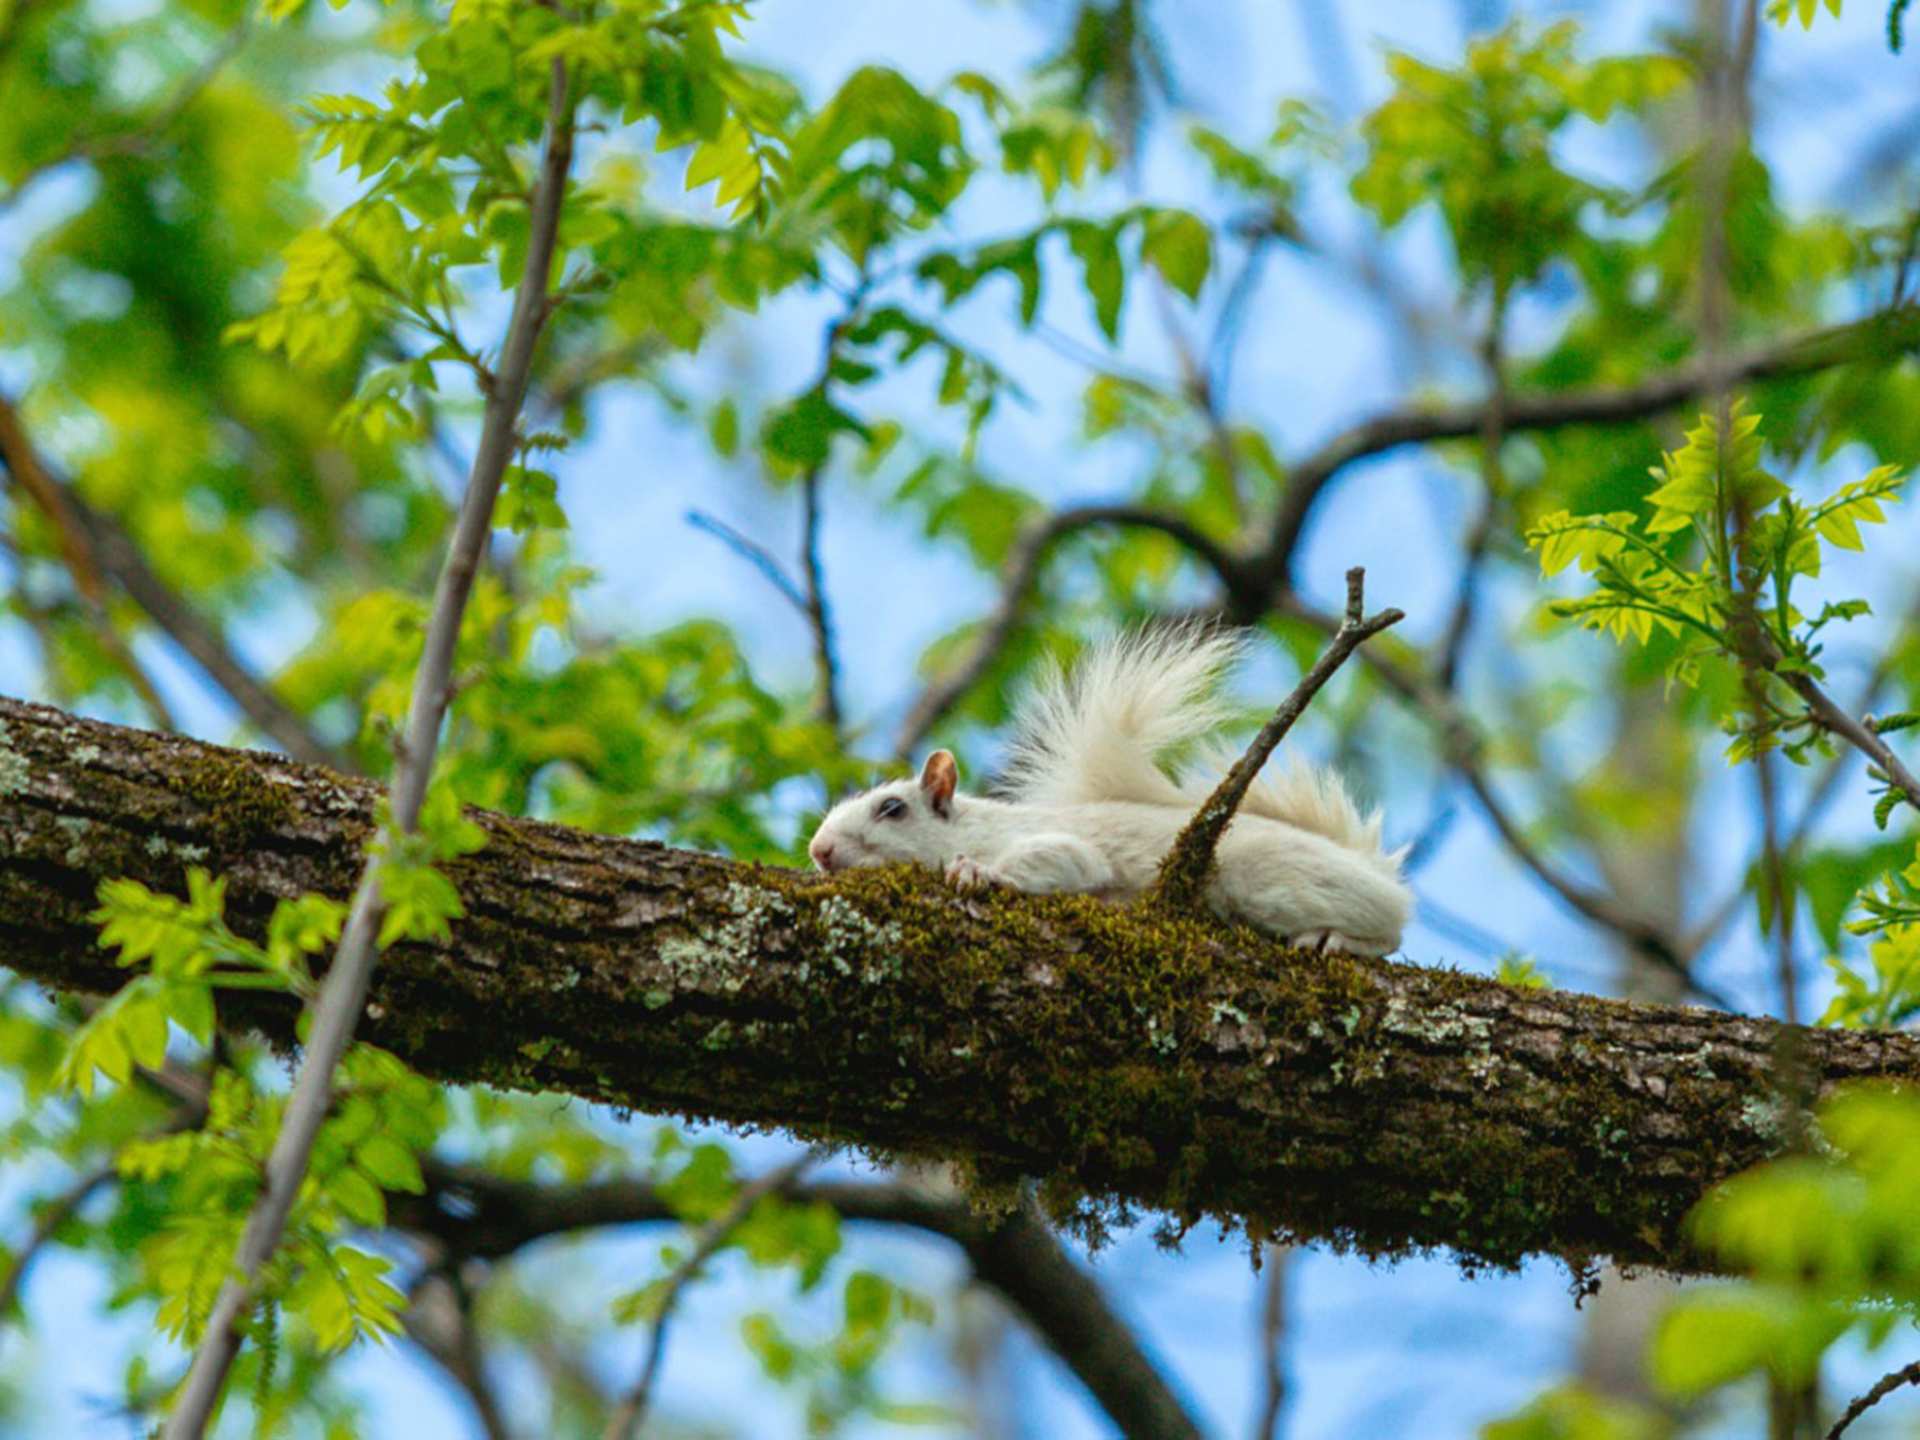 North Carolina | A white squirrel on a tree branch in Brevard, North Carolina